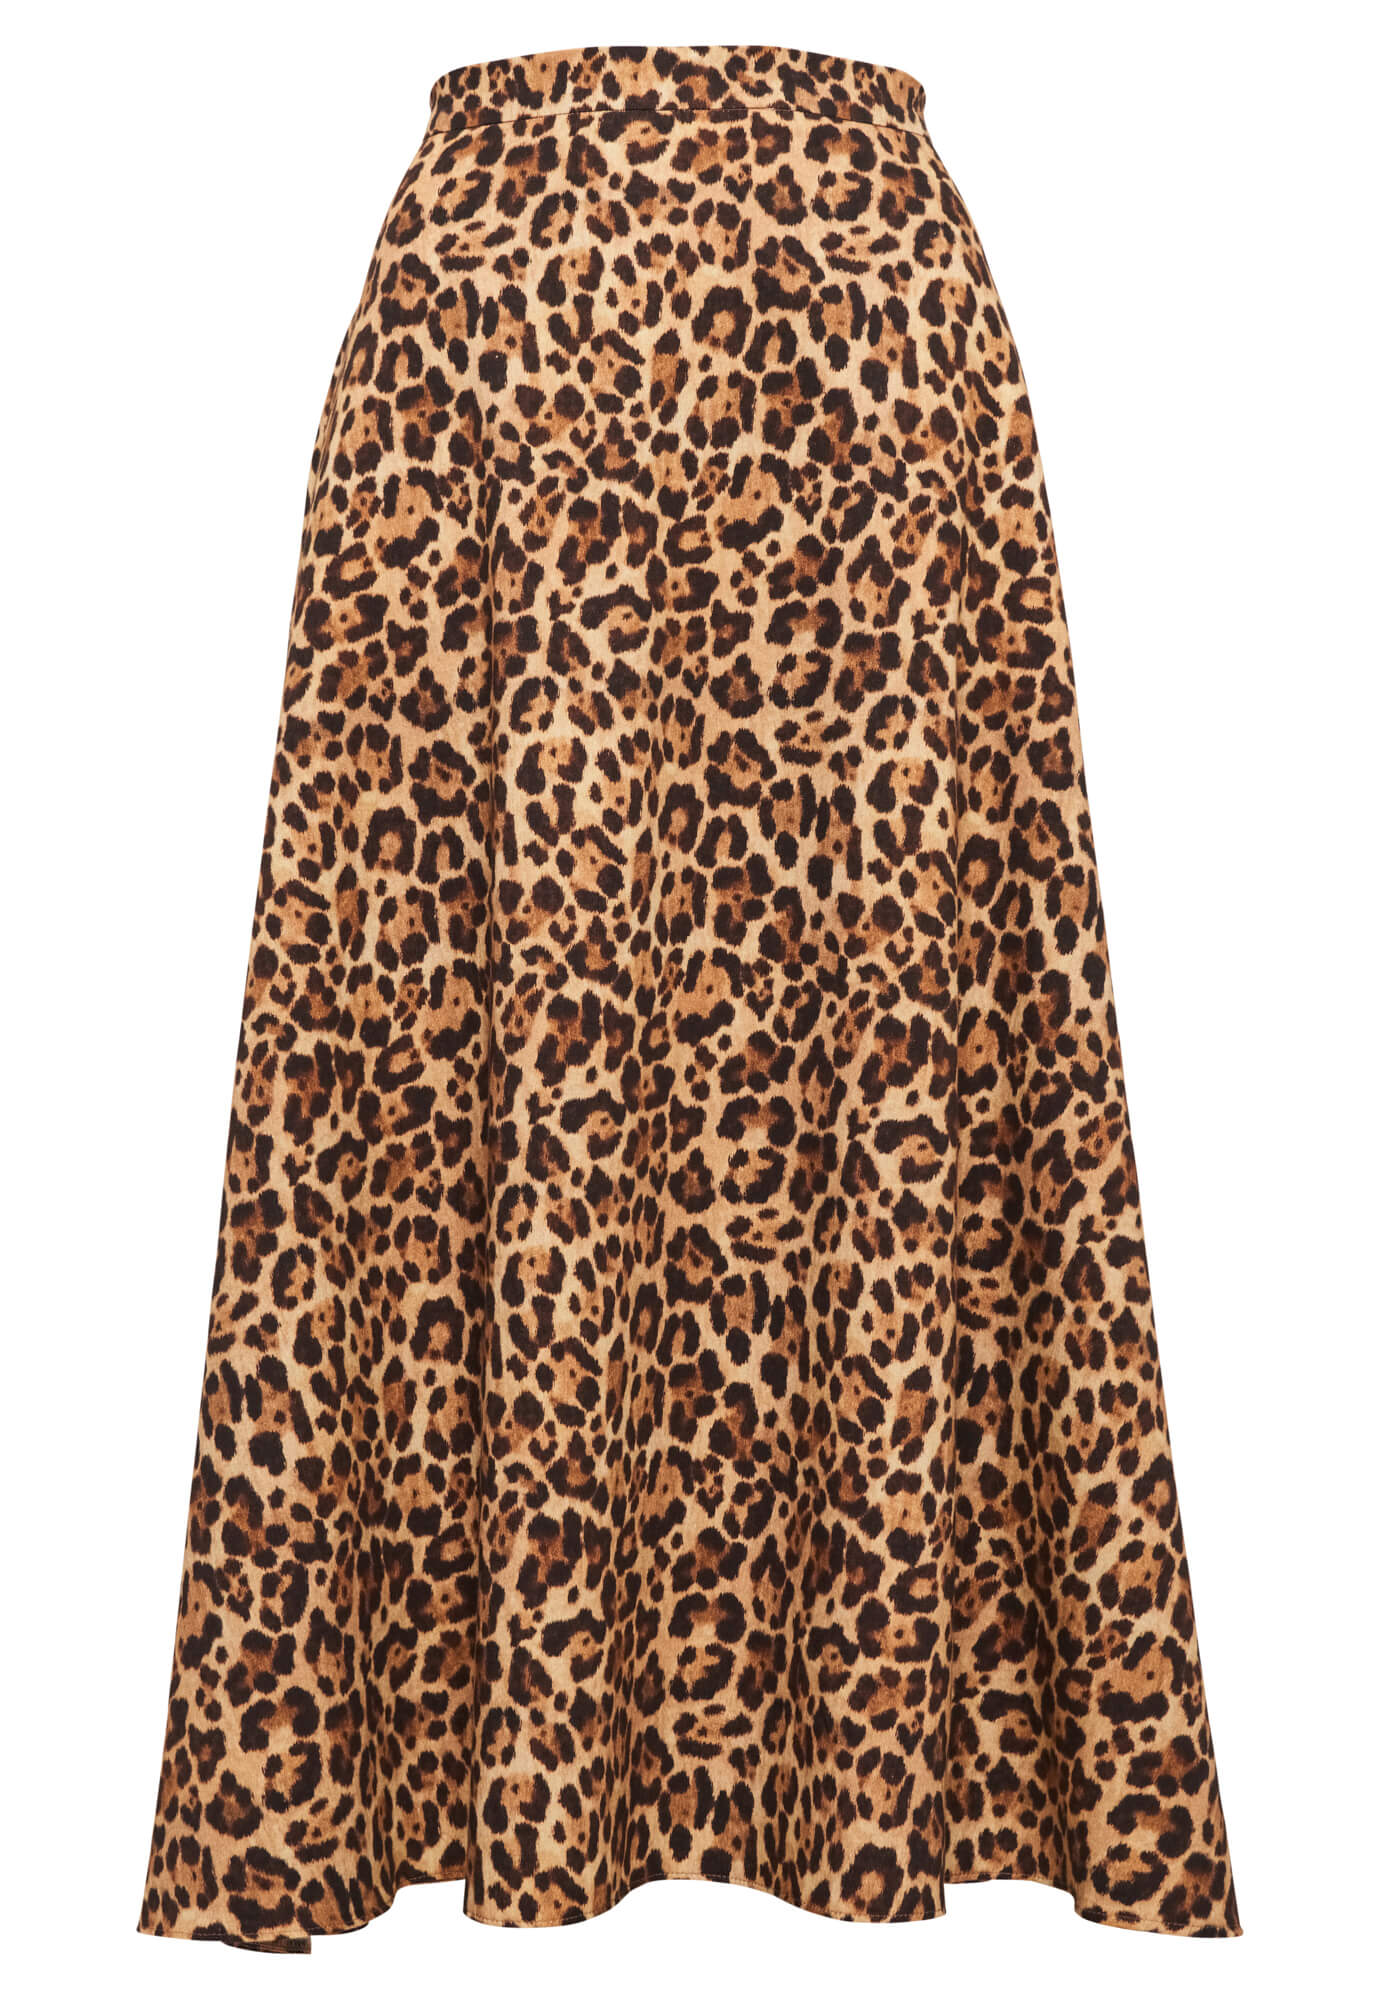 ADDITION Easy Skirt leopard XXL